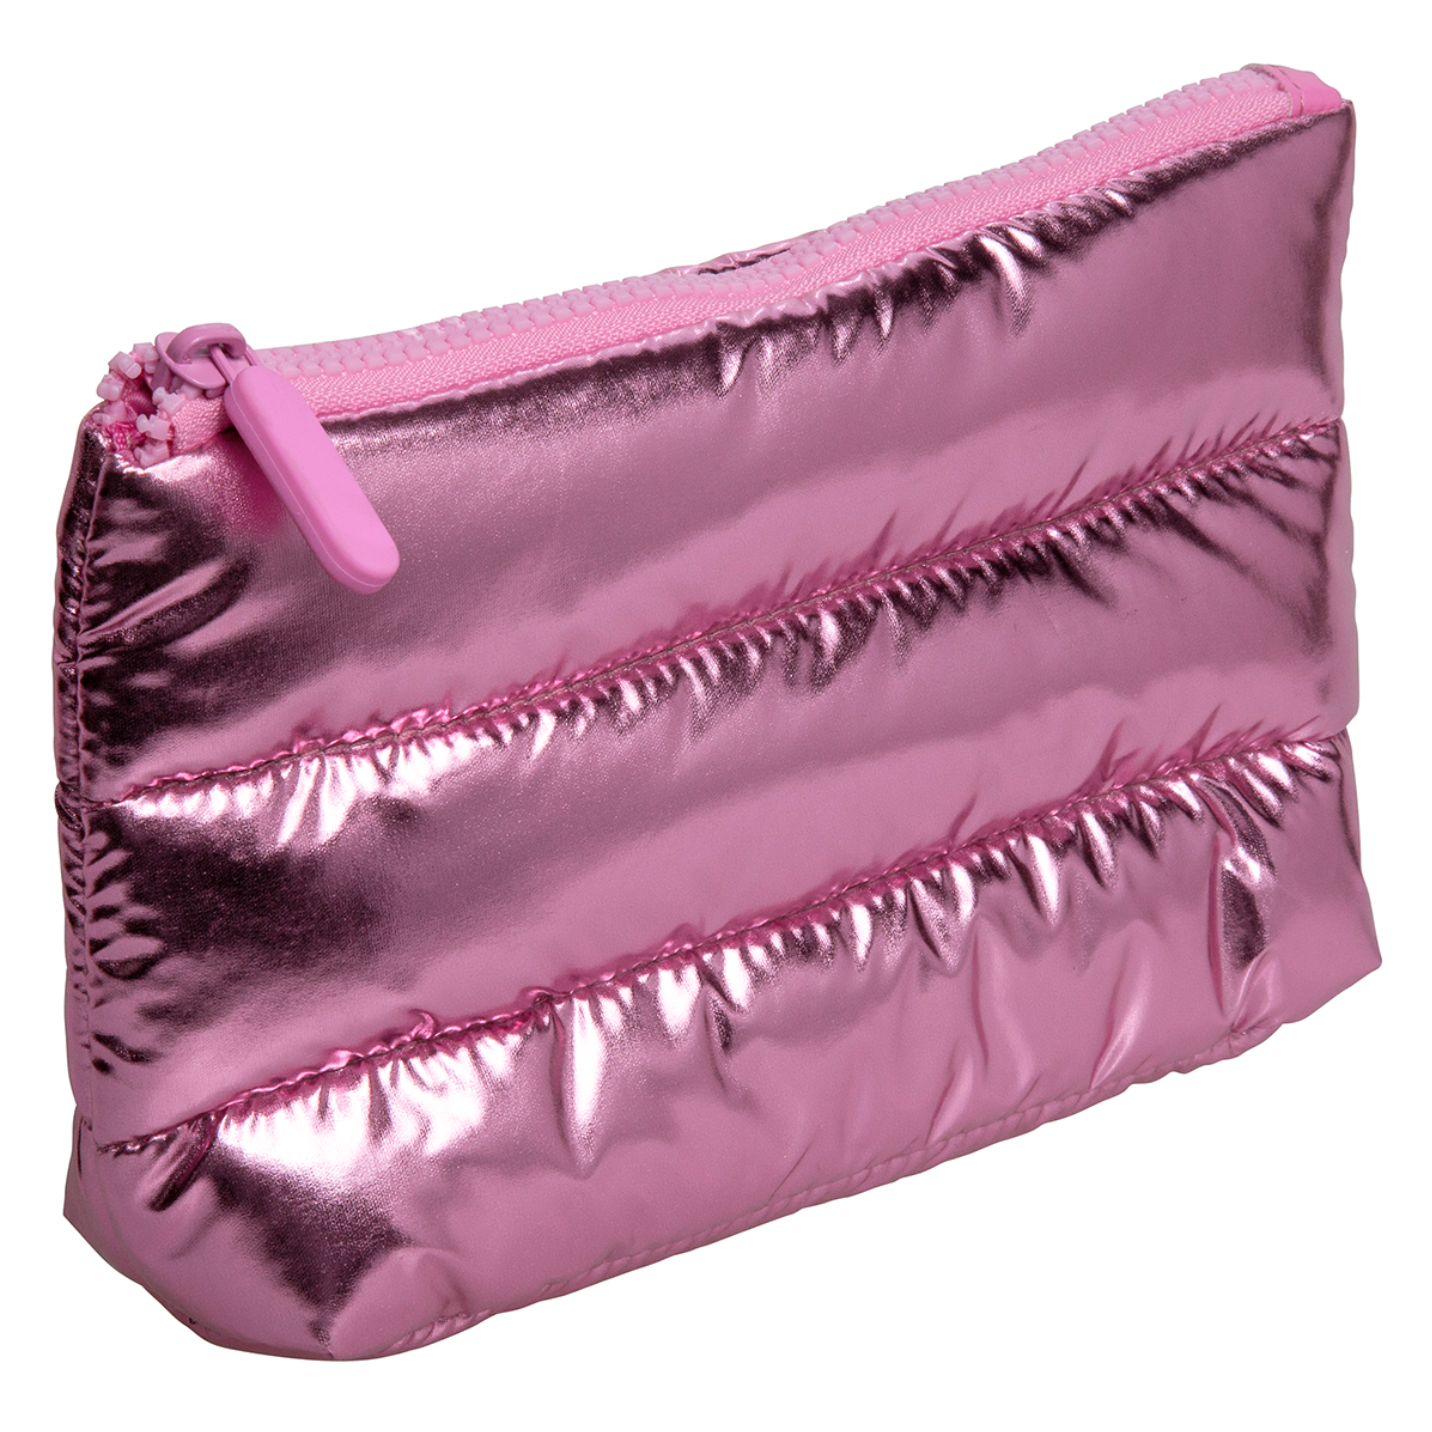 Kingsley Travel Necessities Small Travel Bag - Shiny Pink-KINGSLEY FOR KIDS-Little Giant Kidz